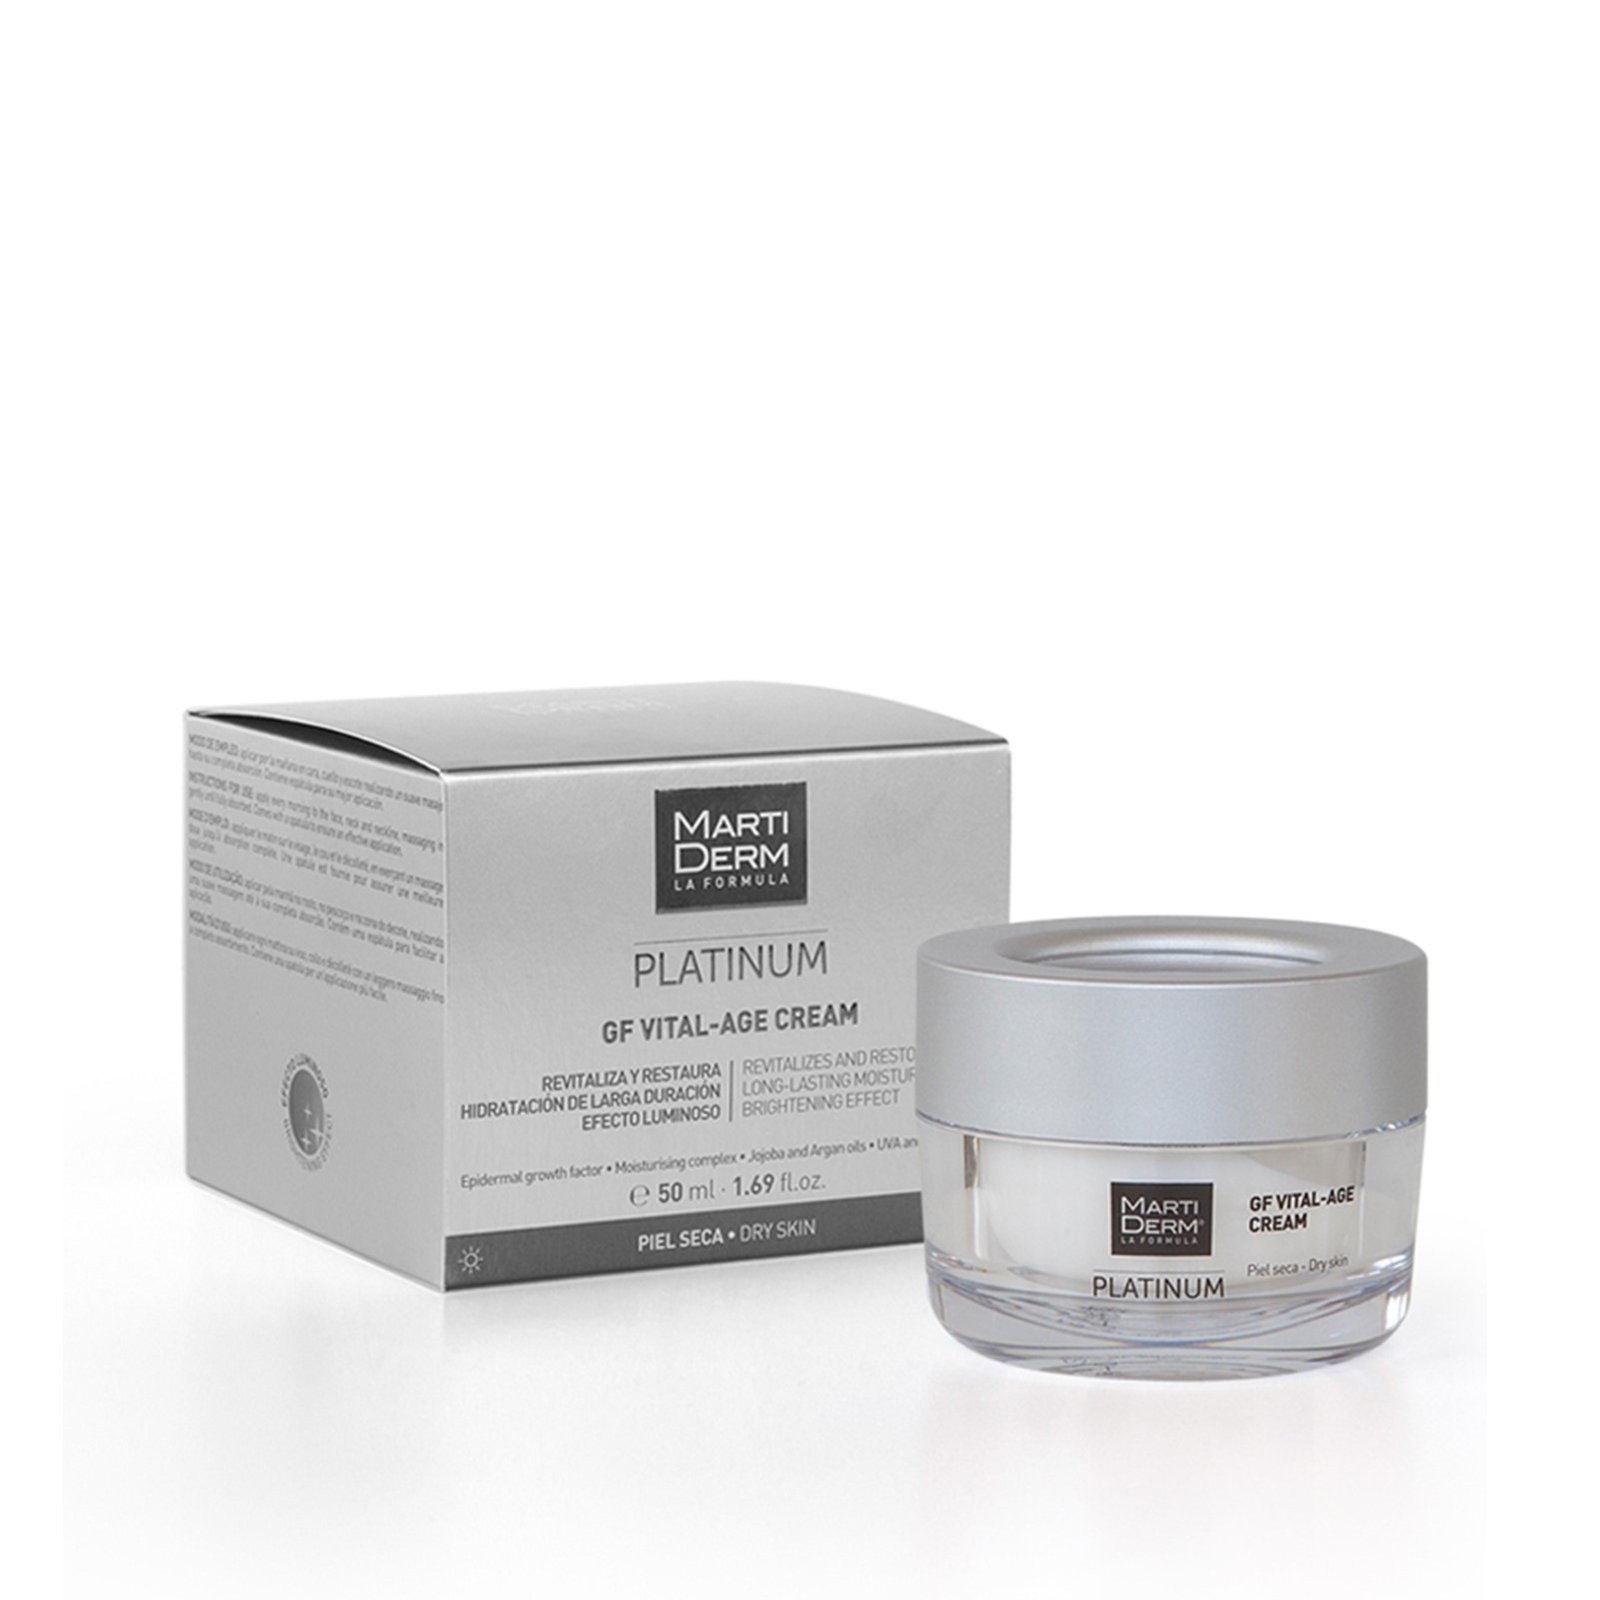 Martiderm Platinum GF Vital-Age Cream Dry Skin 50ml